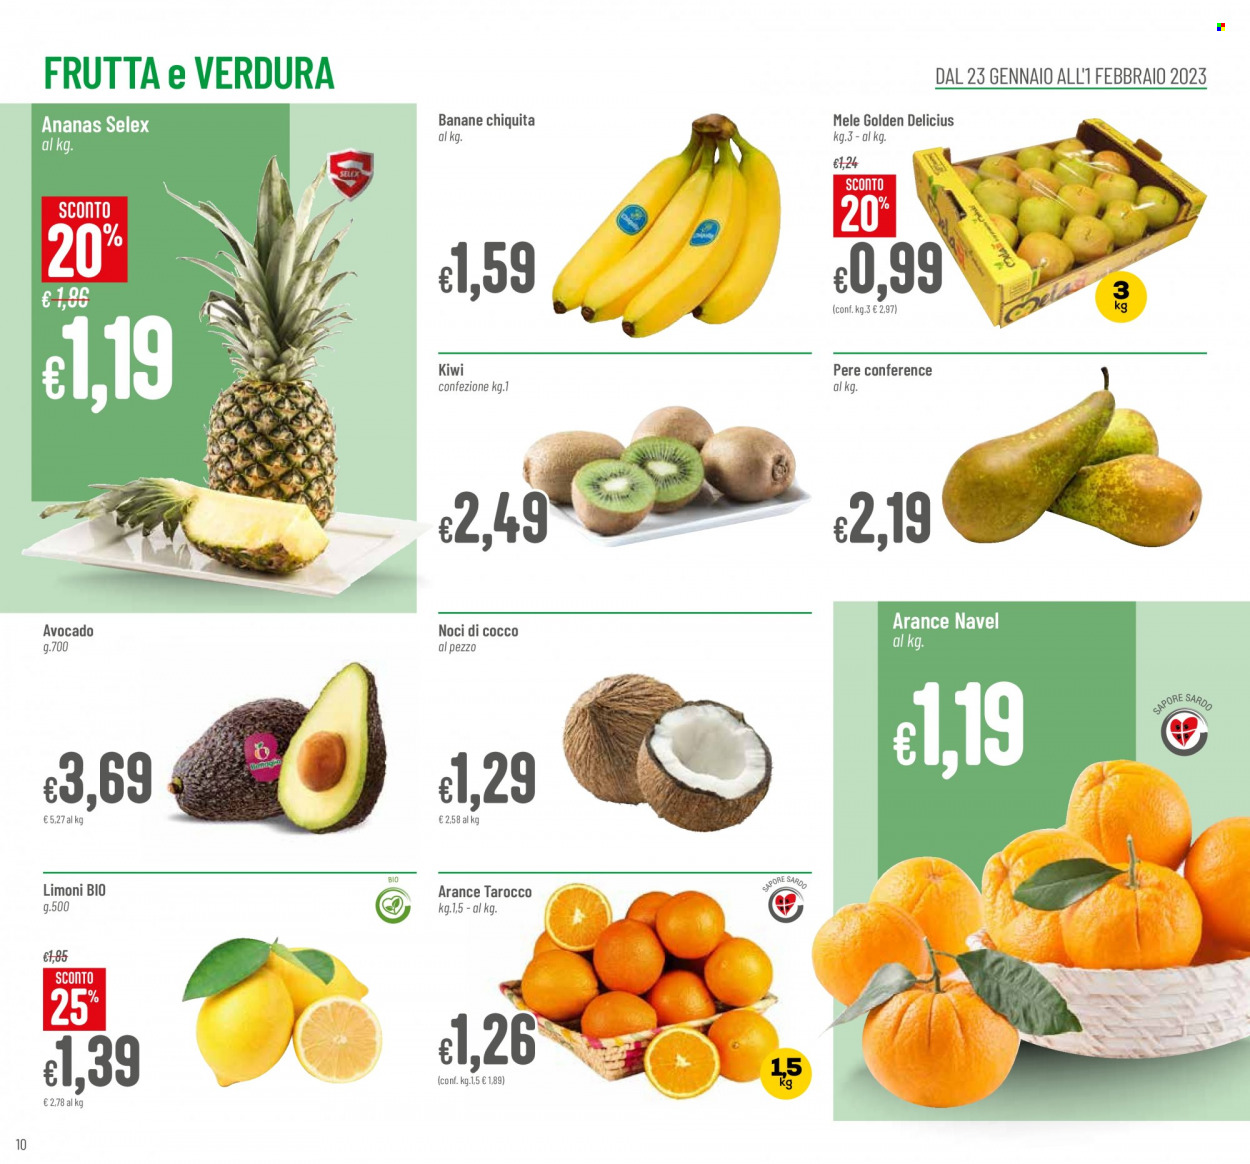 thumbnail - Volantino Pan - 23/1/2023 - 1/2/2023 - Prodotti in offerta - banane, mele, limoni, ananas, arance, arancie Navel, pere, kiwi, avocado, Chiquita, noce di cocco, Delicius, noci. Pagina 10.